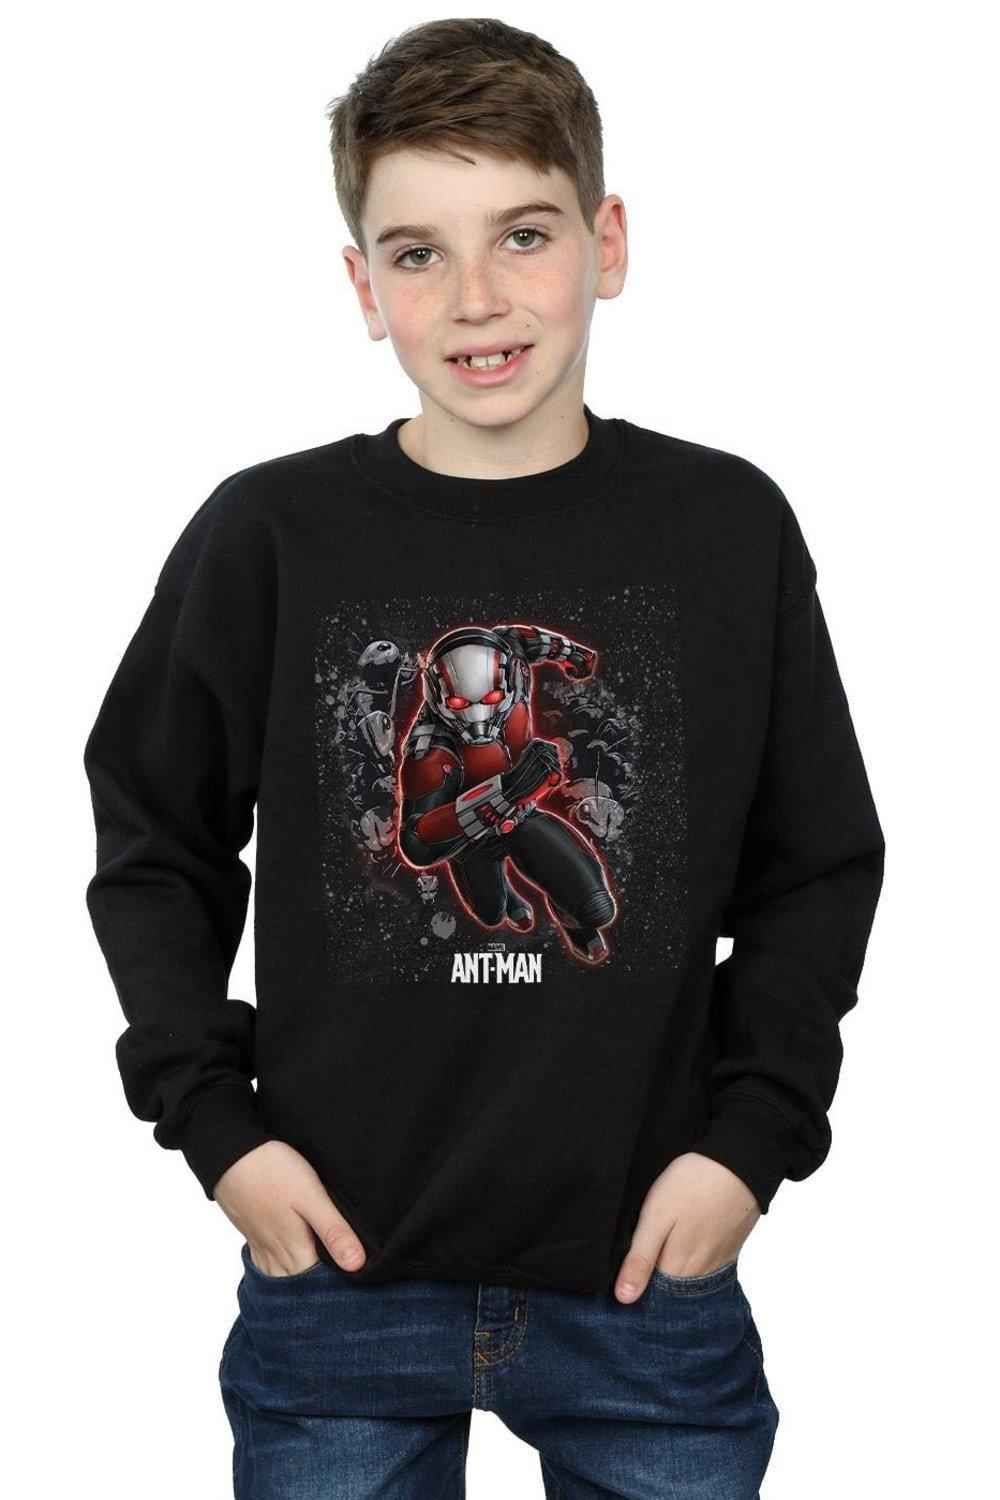 Ant-Man Ants Running Sweatshirt